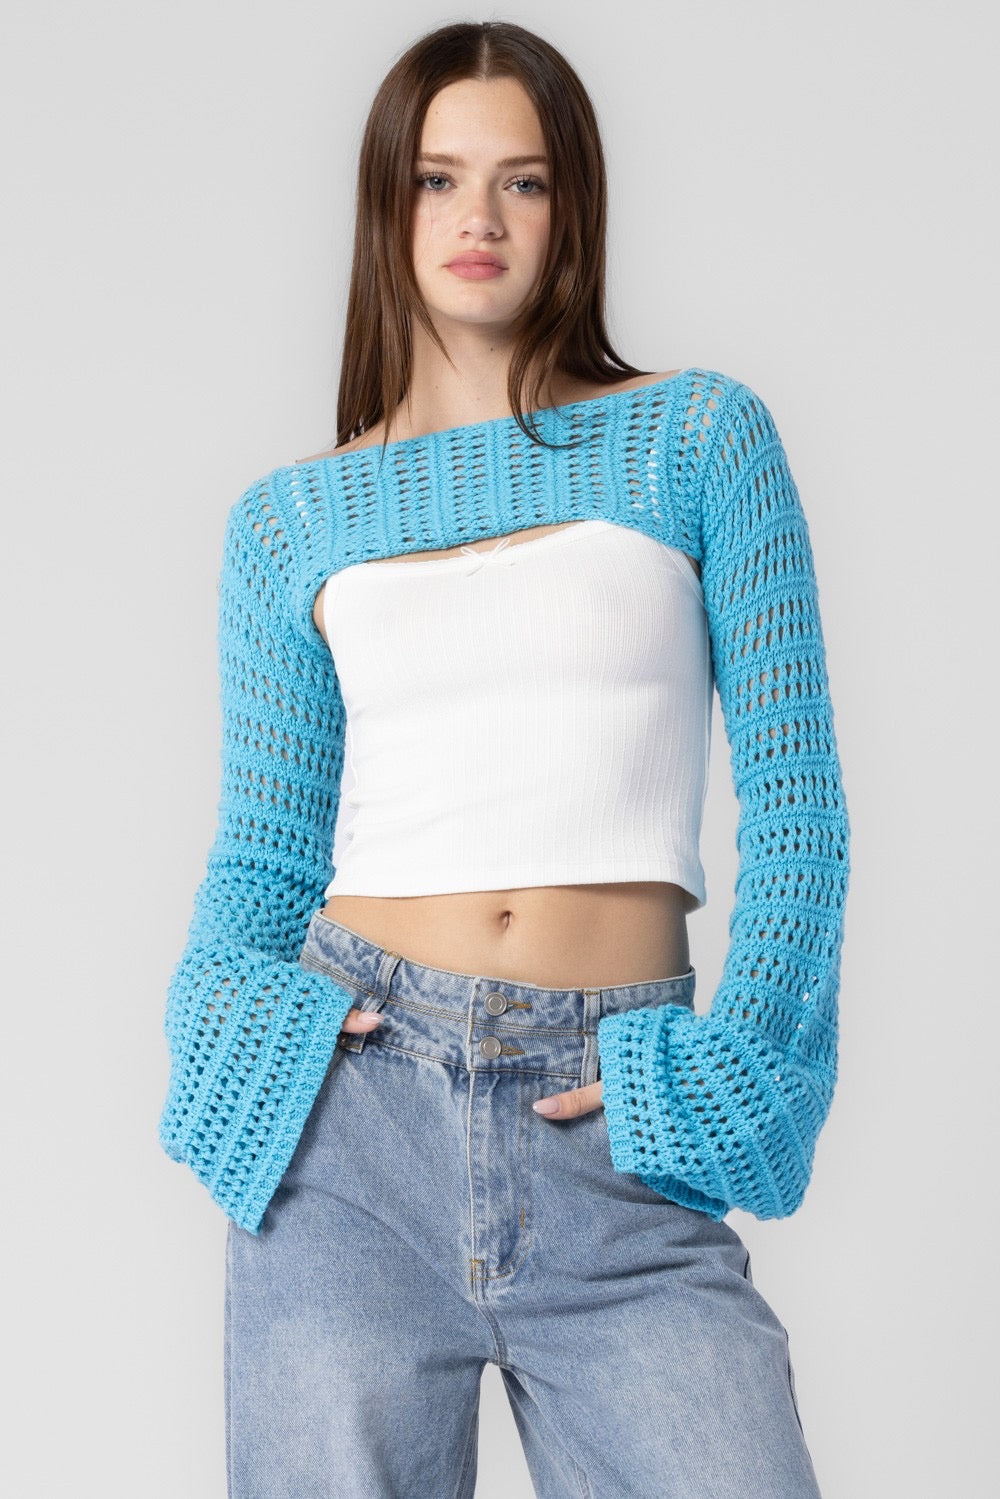 Crochet knitted Bolero top - turquoise